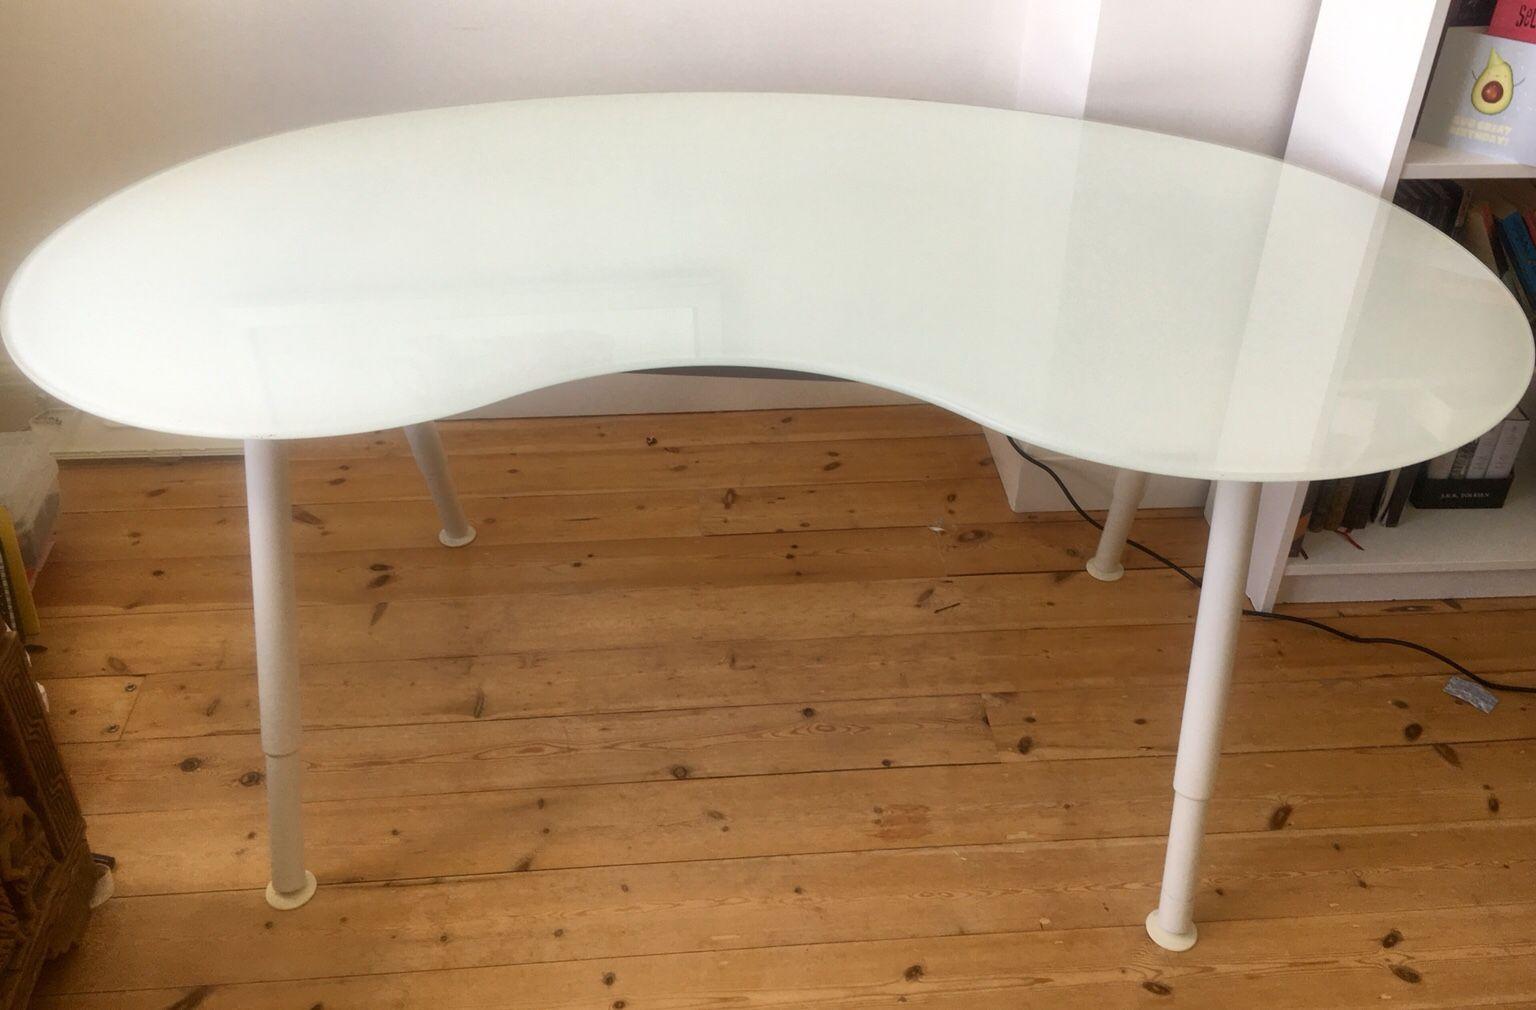 Elegant Curved Glass Desk Ikea Galant In Ha3 London Fur 45 00